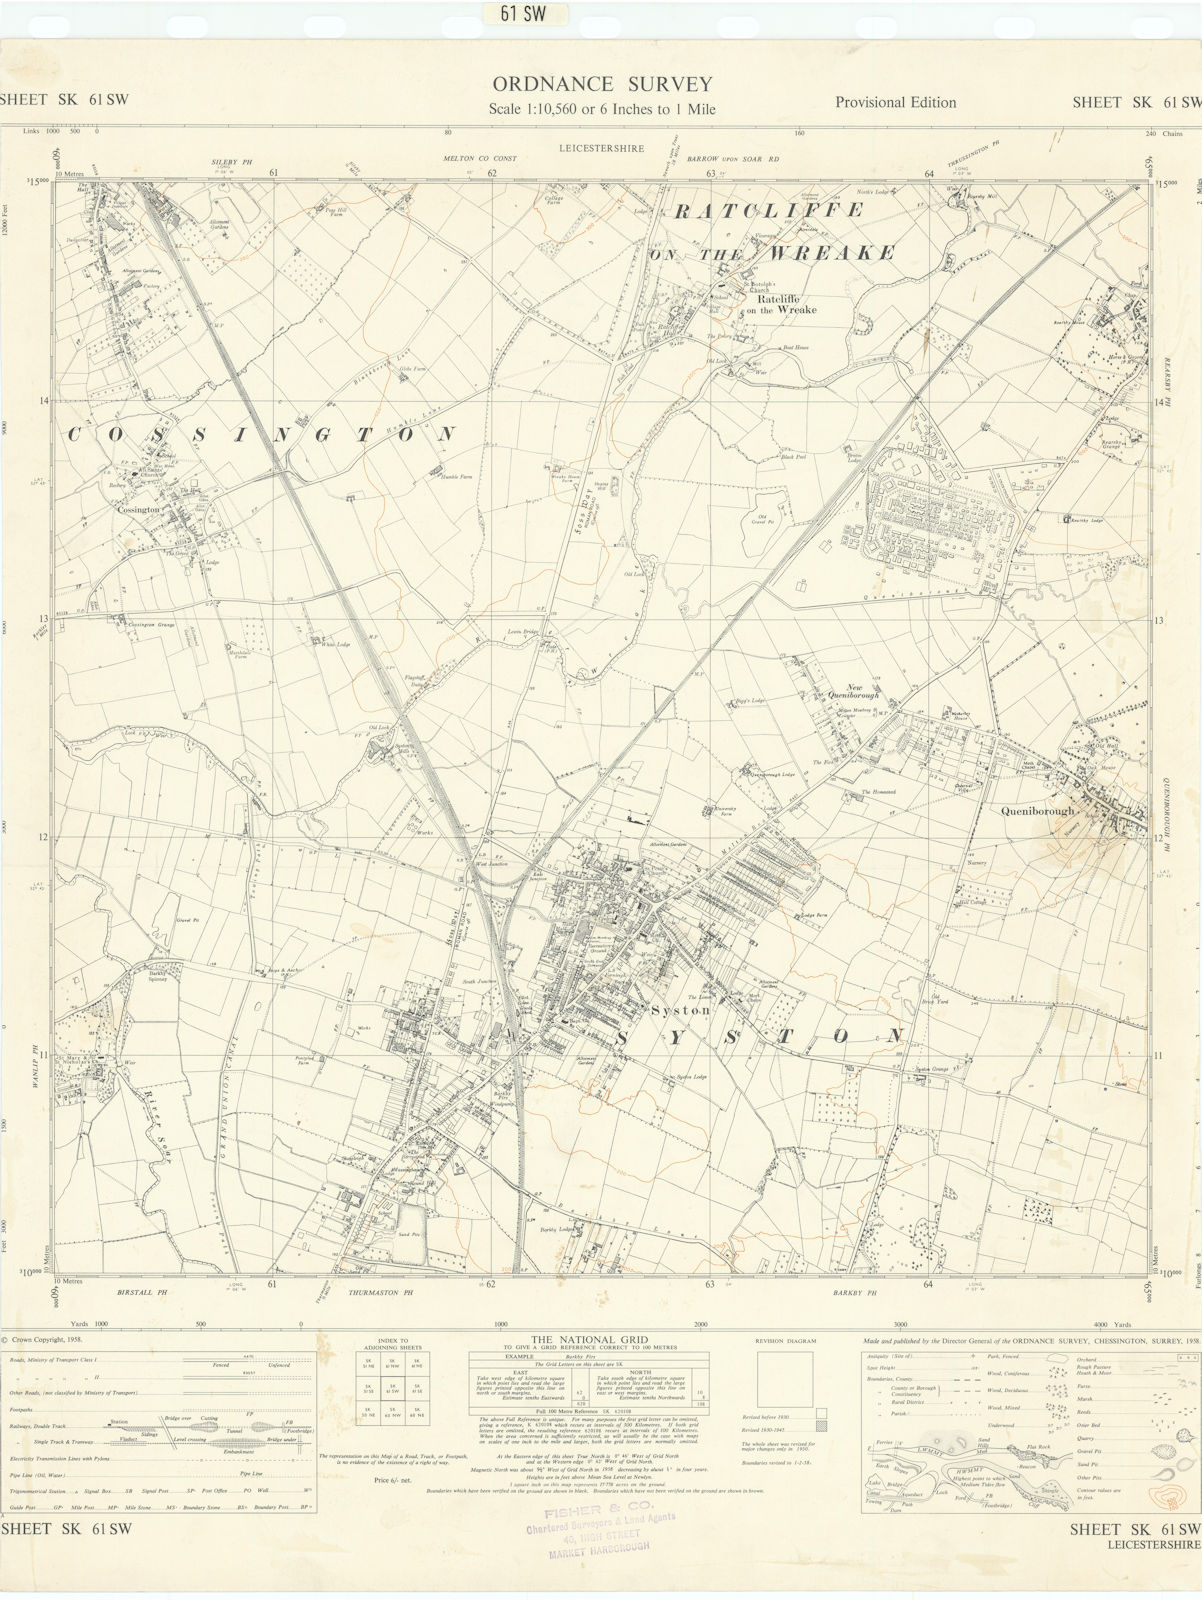 Ordnance Survey SK61SW Leics Syston Radcliffe/Wreake Queniborough 1958 old map